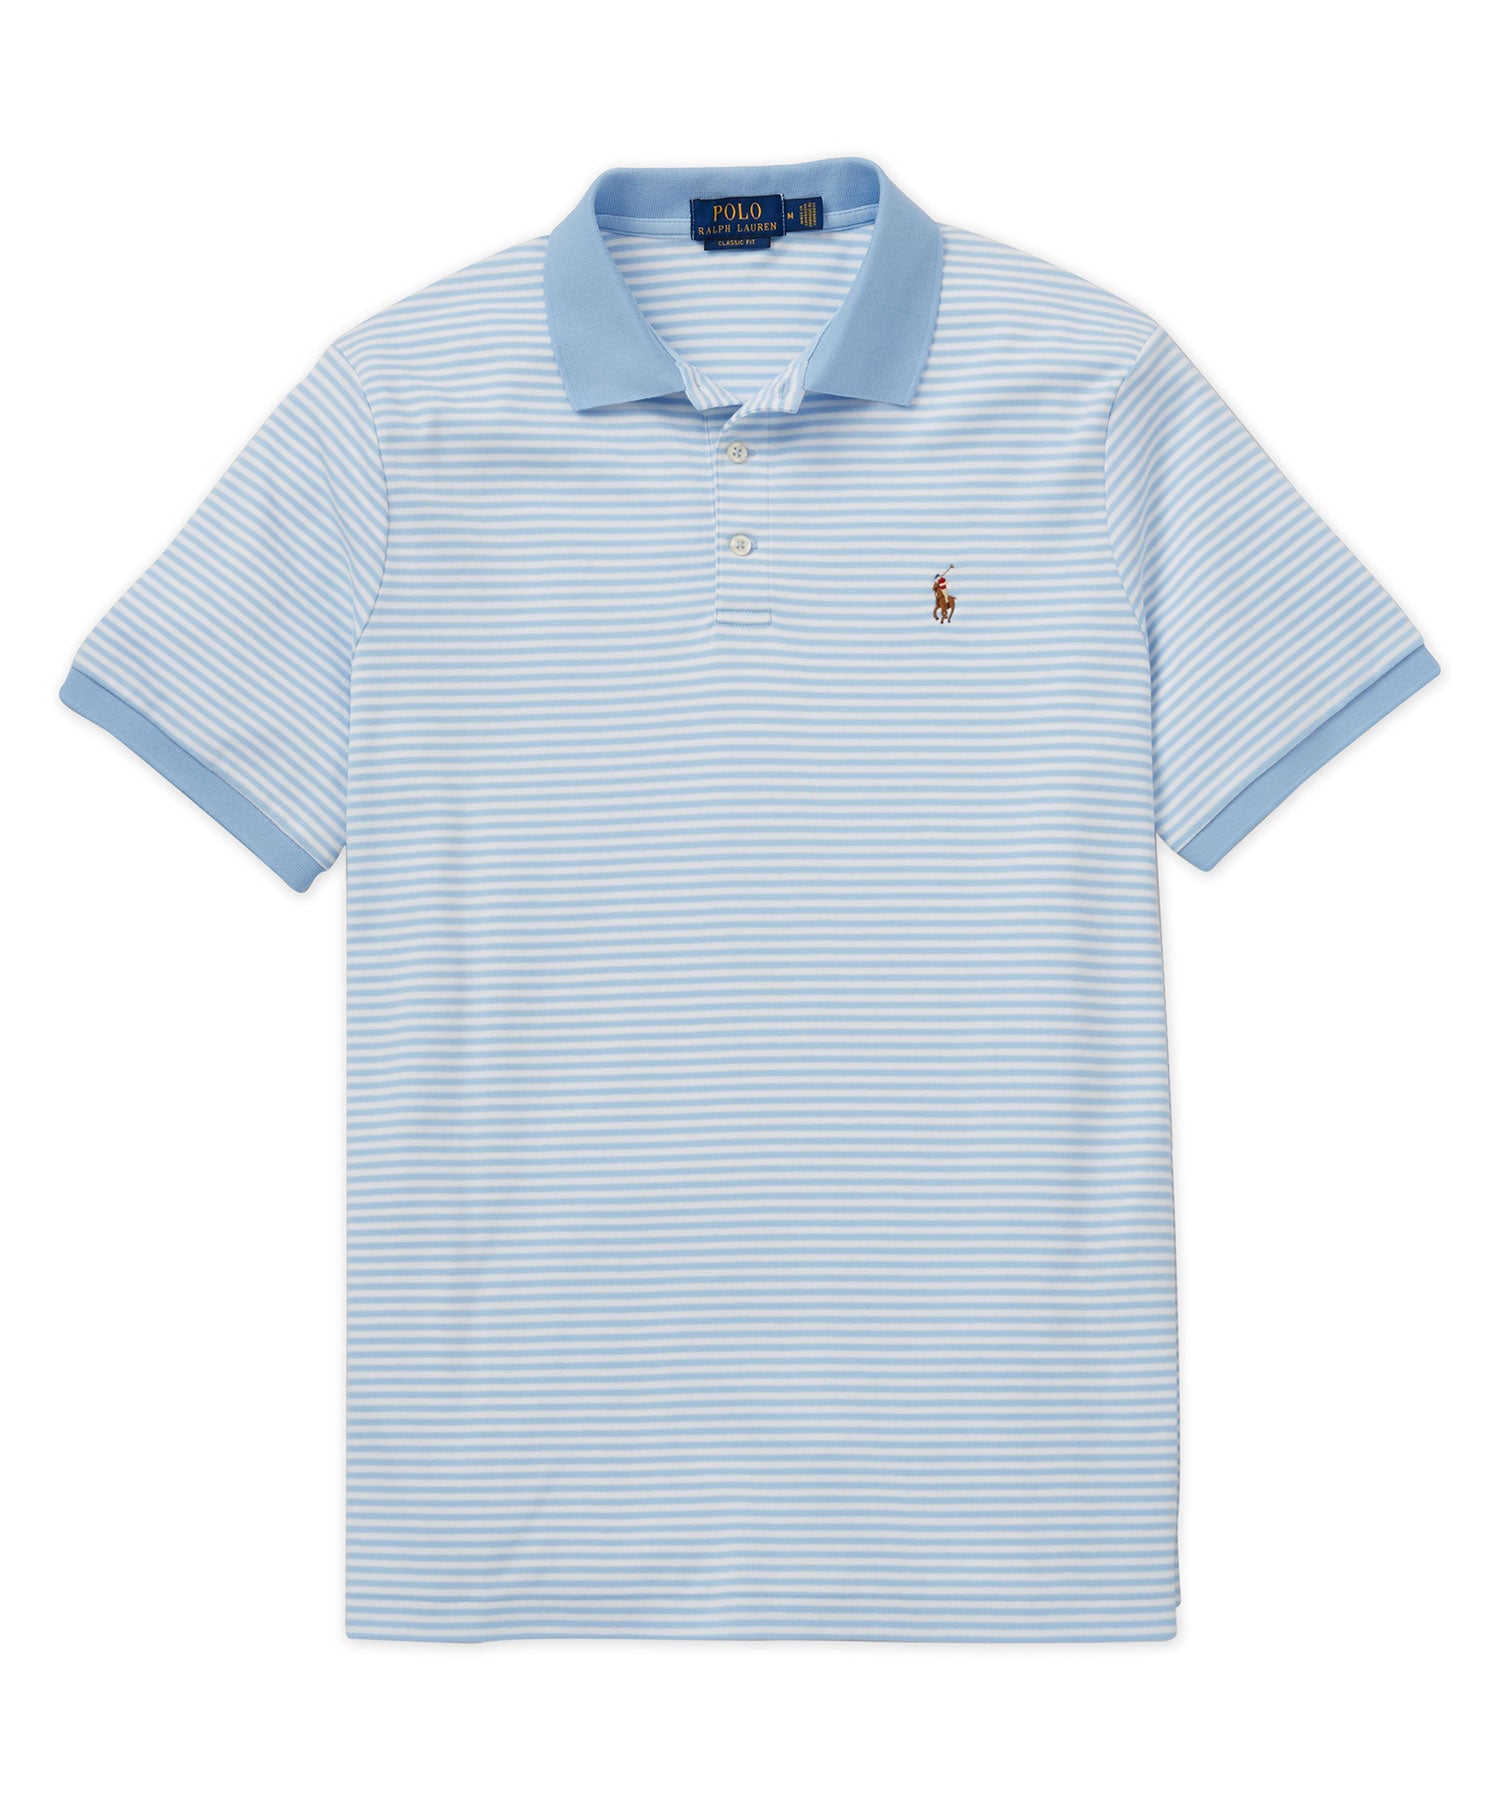 Polo Ralph Lauren Mens Classic Fit 3 Button Interlock Polo Shirt (Medium,  Navy) at  Men's Clothing store